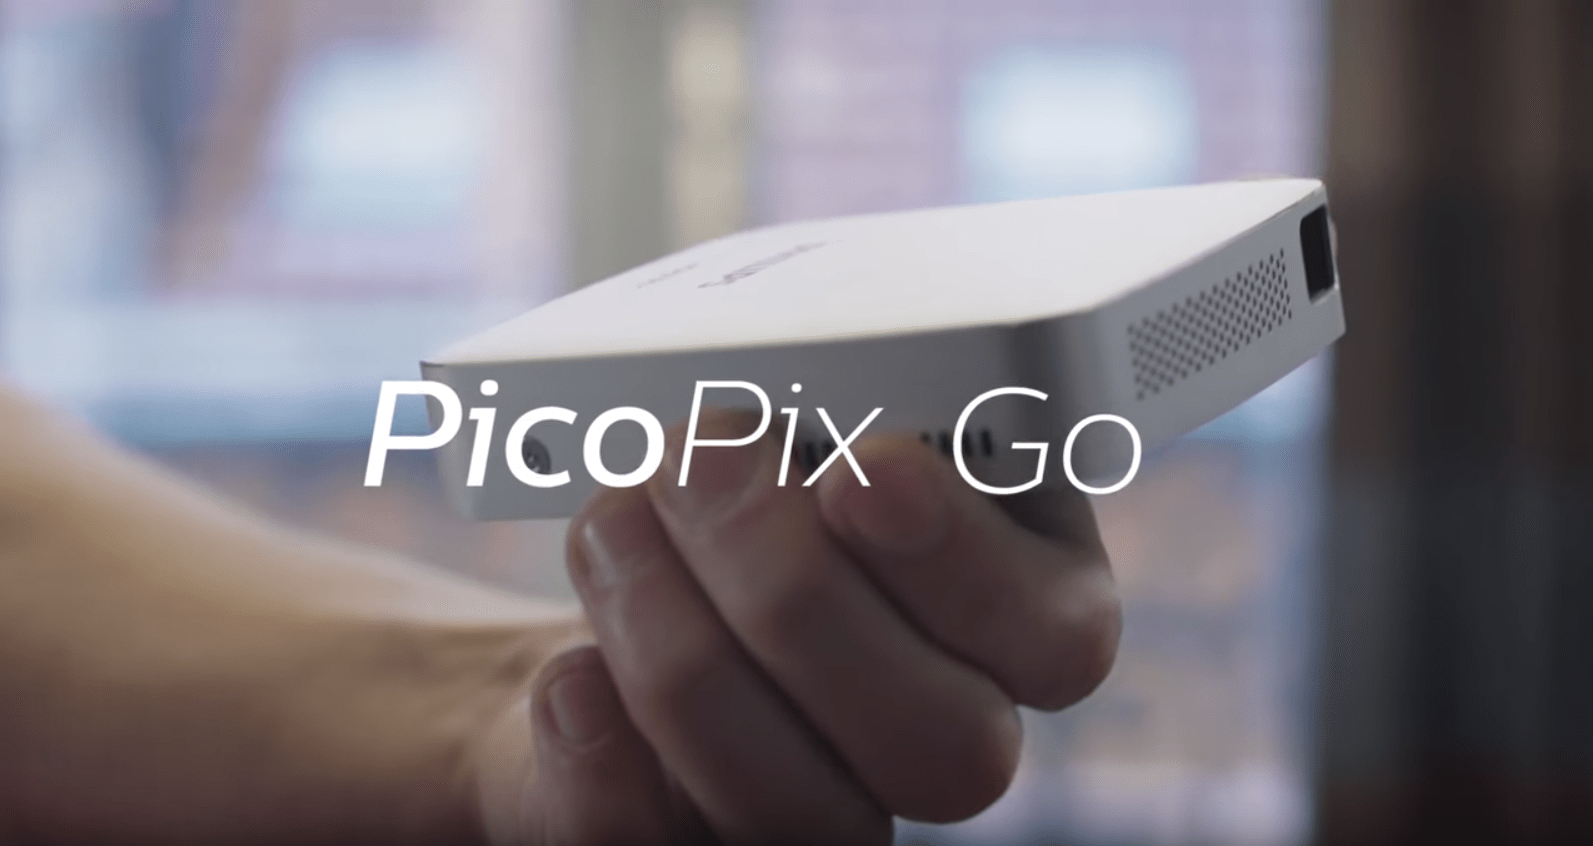 Philips PicoPix Pocket Projector